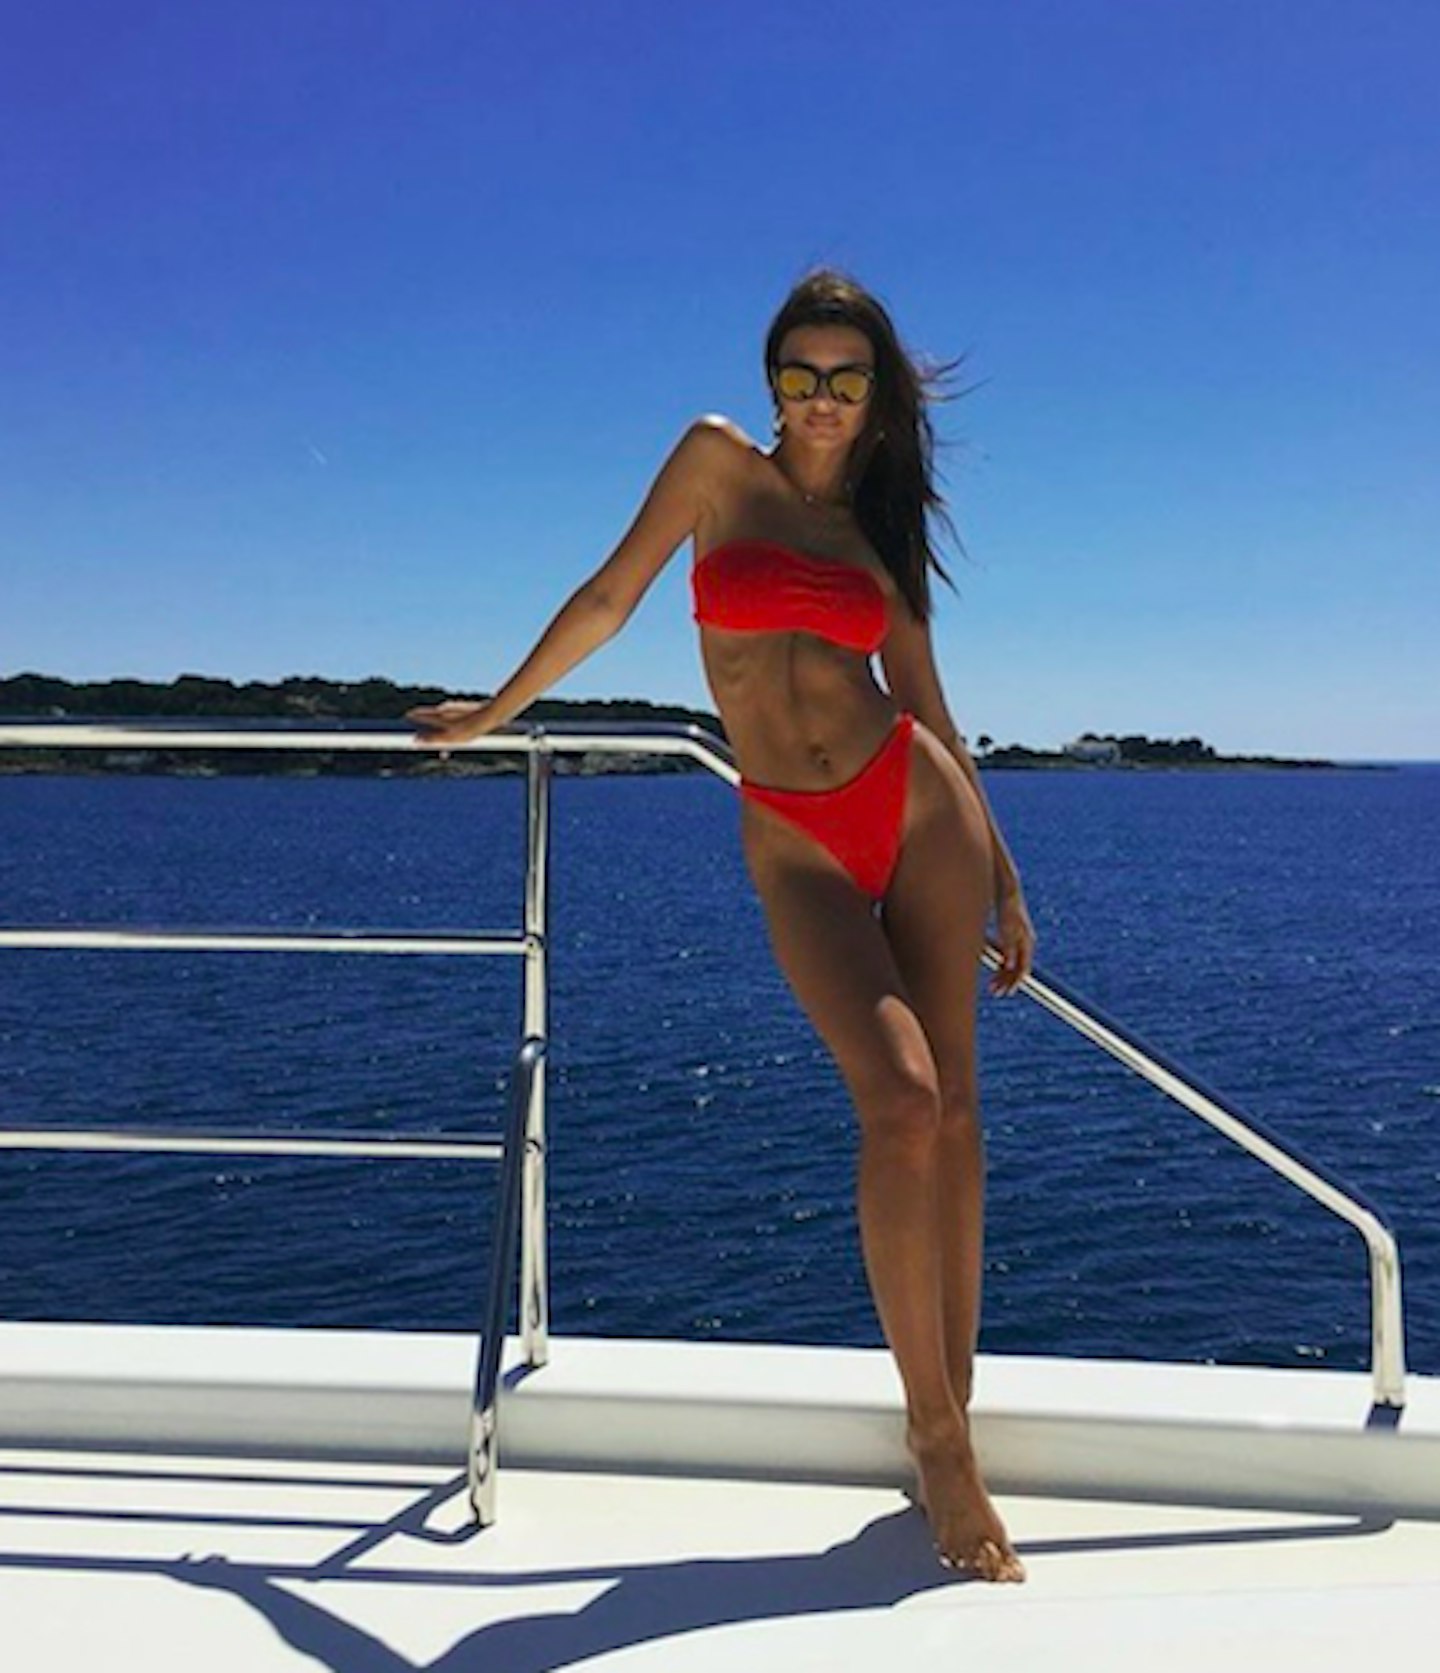 Emily Ratajkowski's red bikini